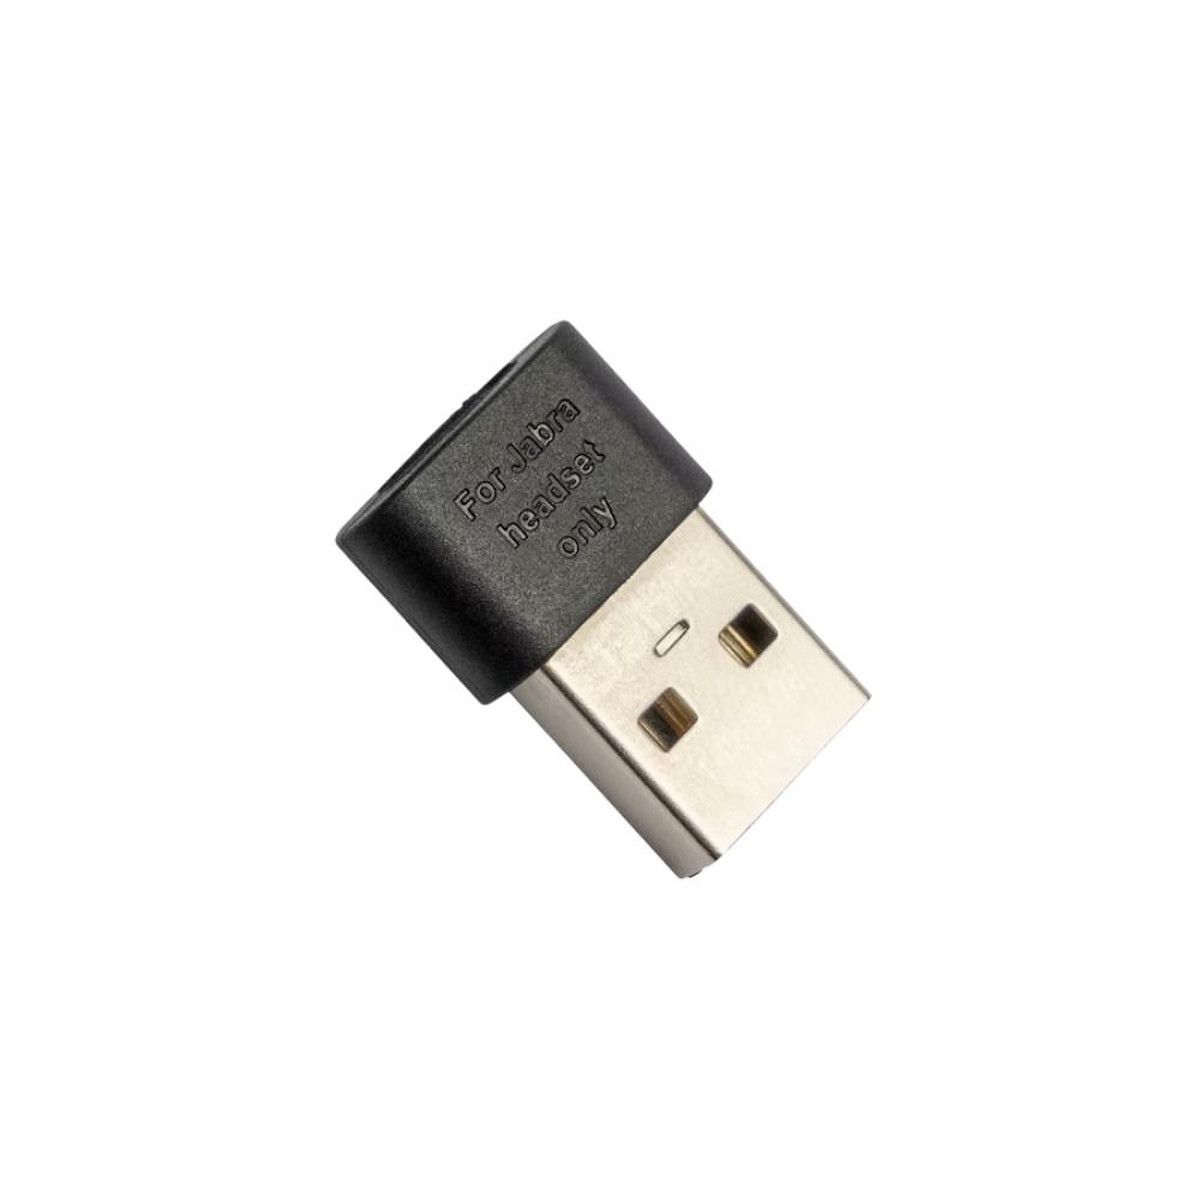 Jabra USB-C Adapter - USB-C Female to USB-A Male 14208-38 (0706487023425) photo